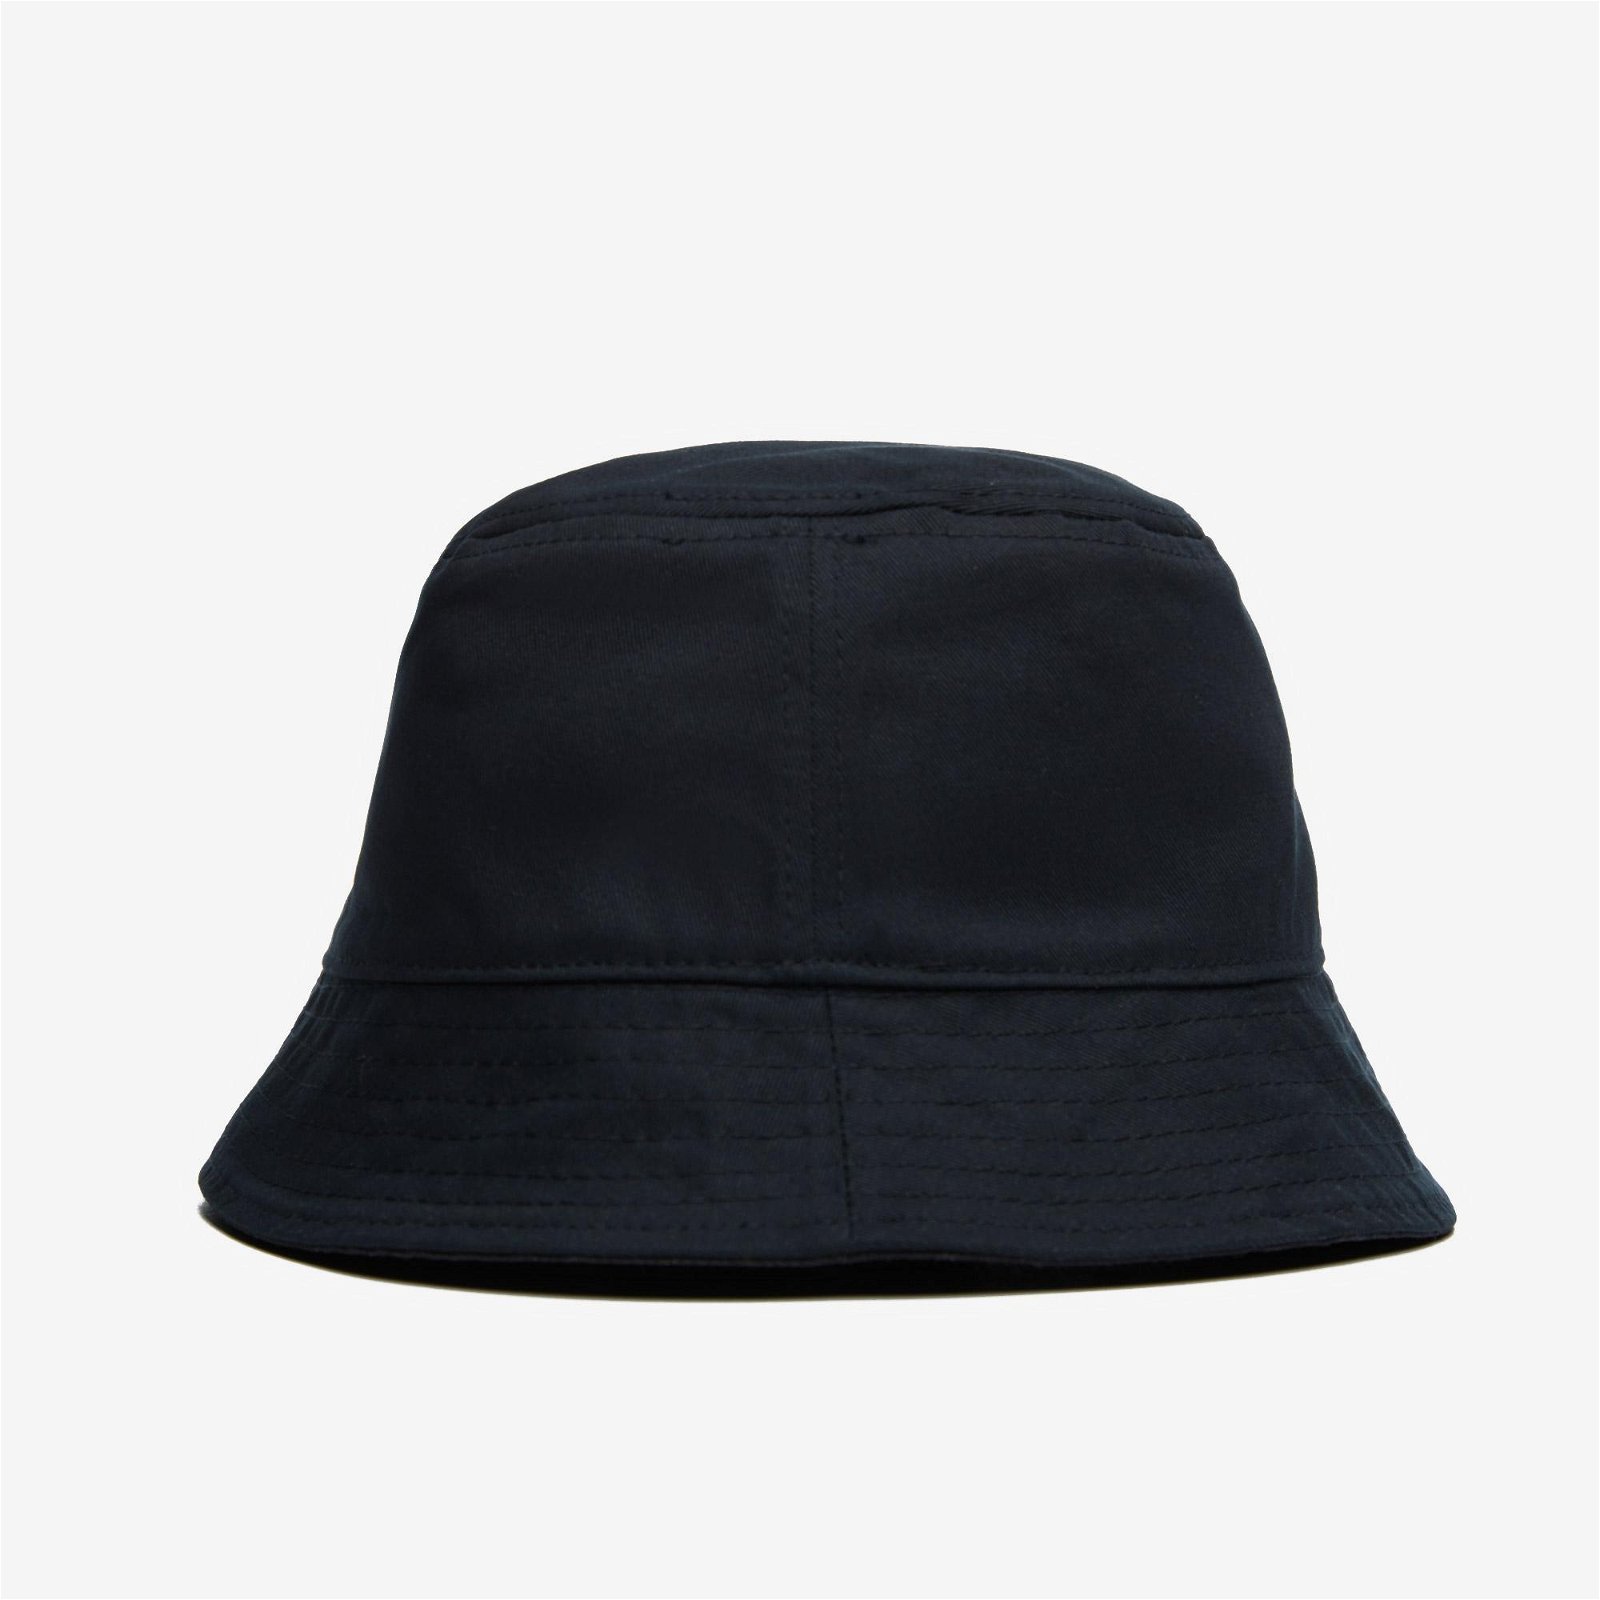 Champion Bucket Unisex Siyah Şapka